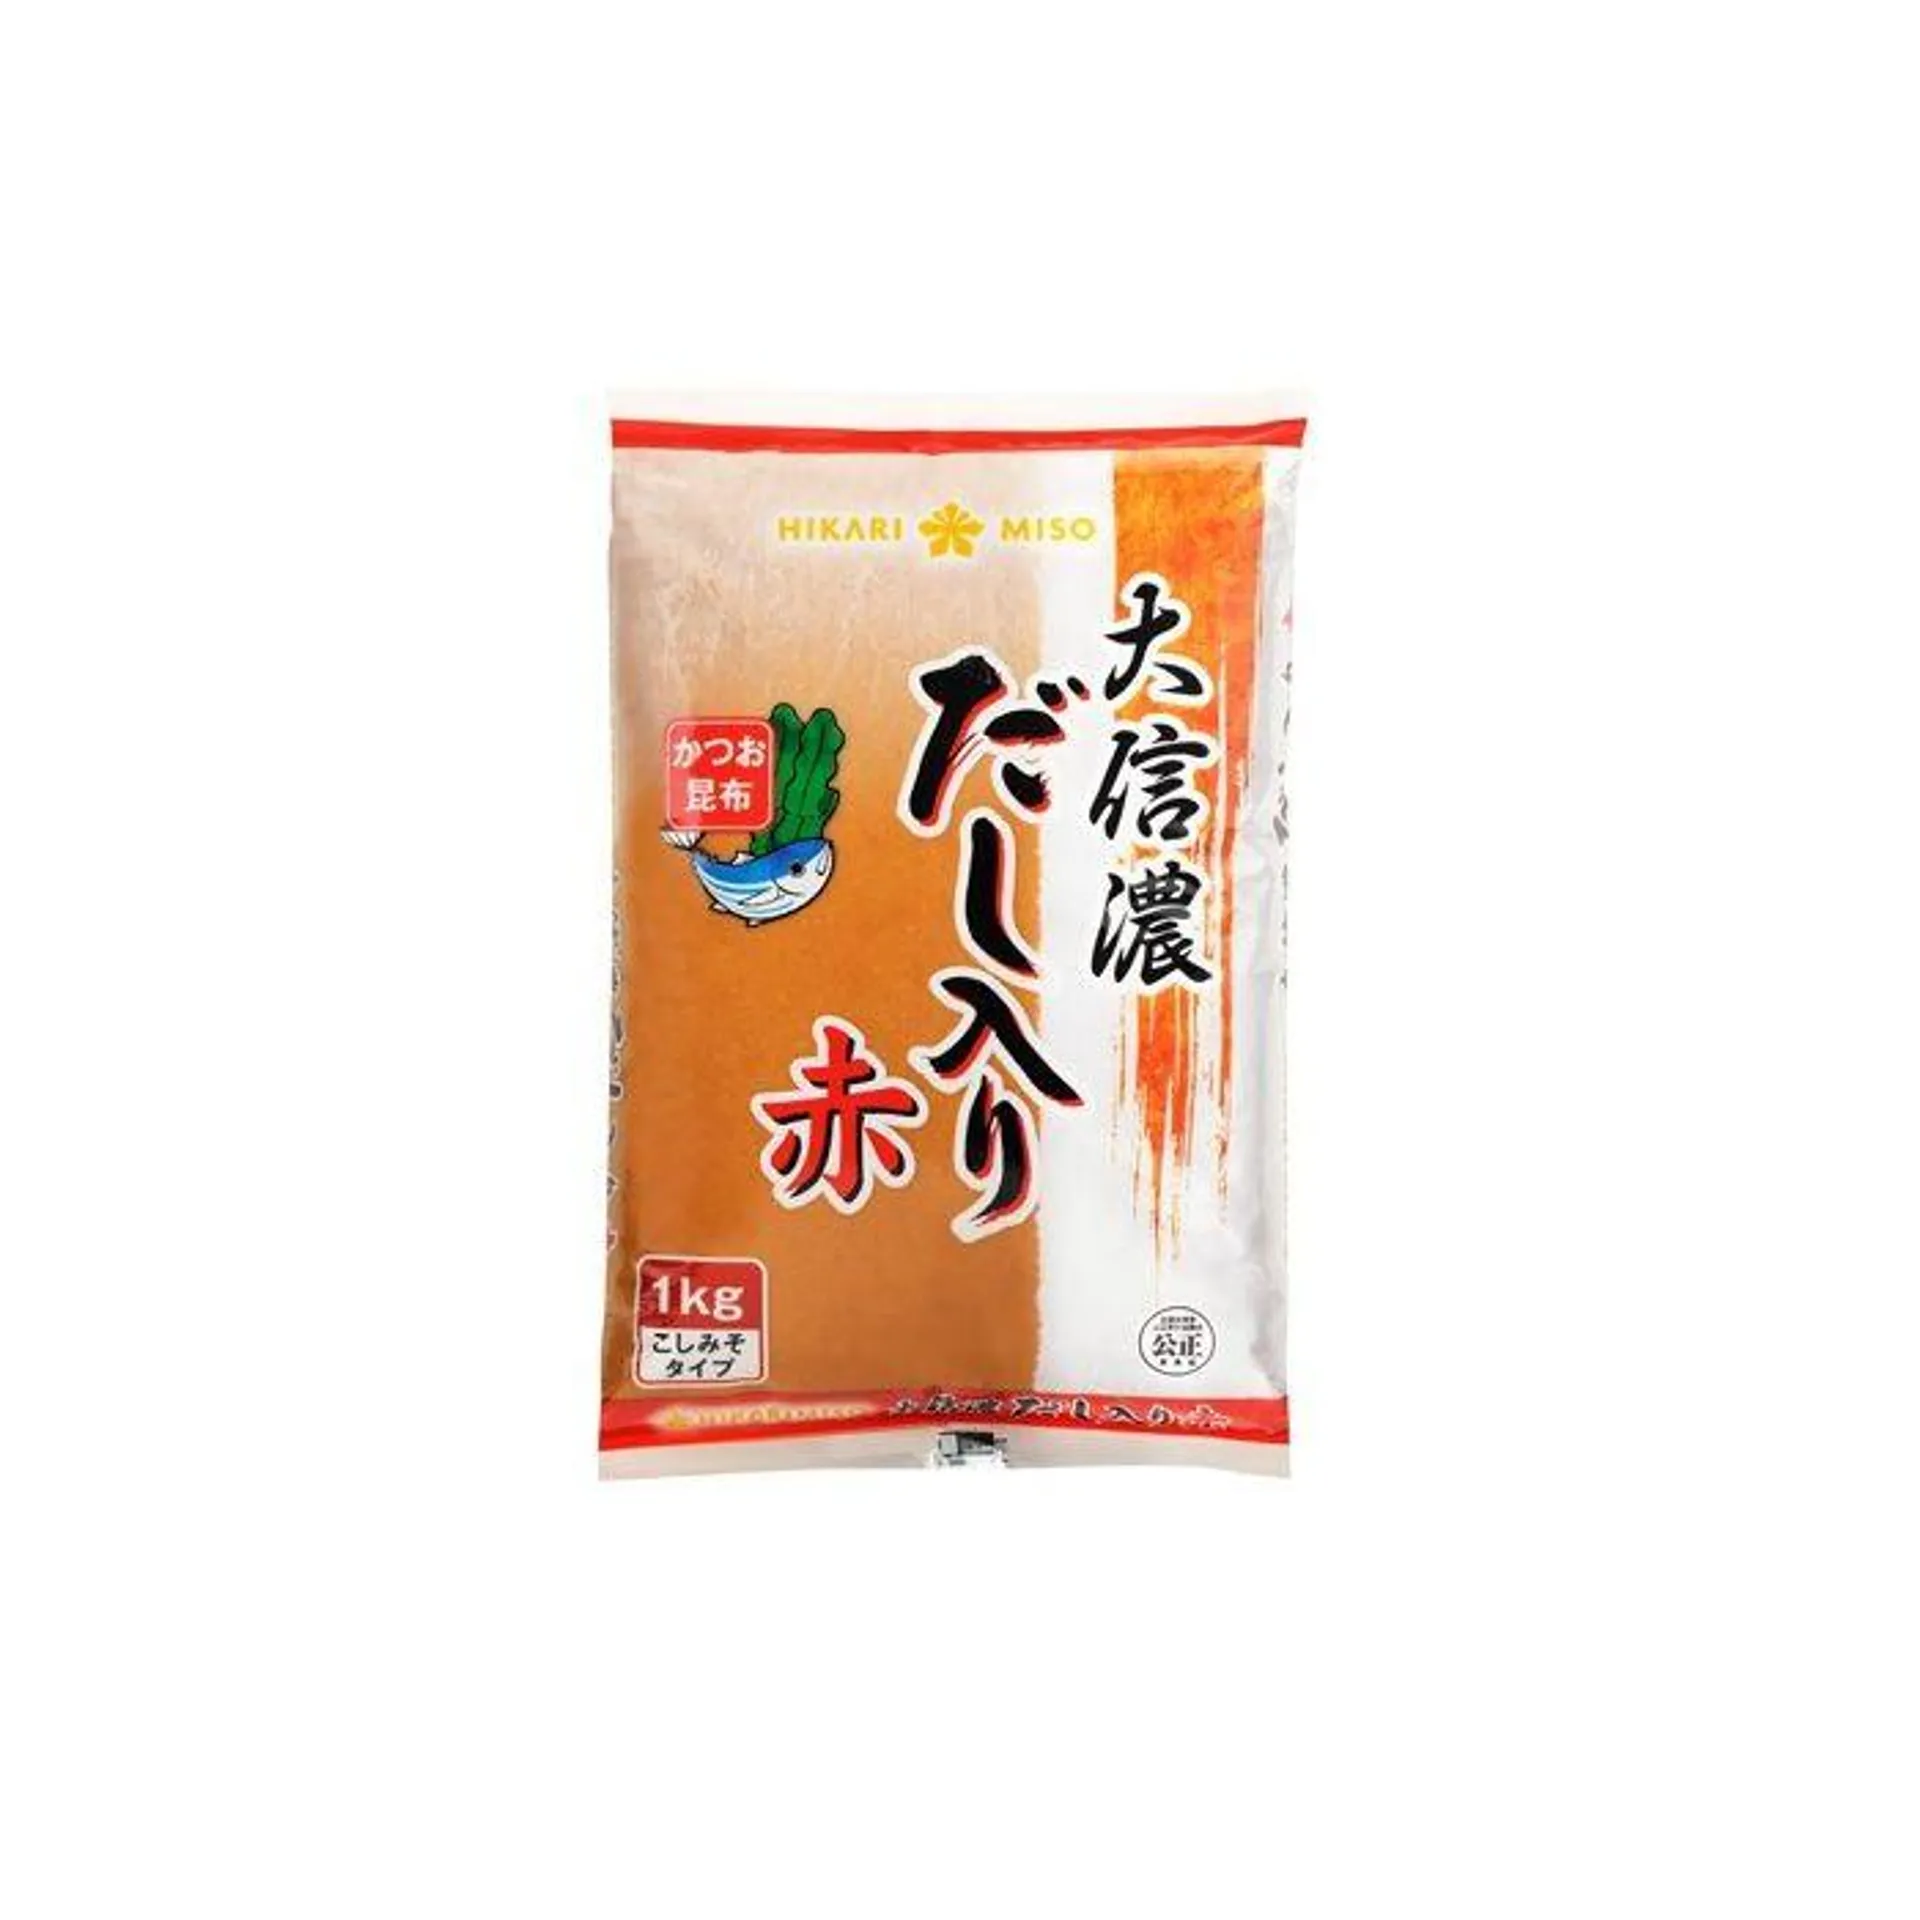 HIKARI MISO / SOYBEAN PASTE WITH FISH STOCK RED(DASHIIRI MISO DAI SHINANO 1kg